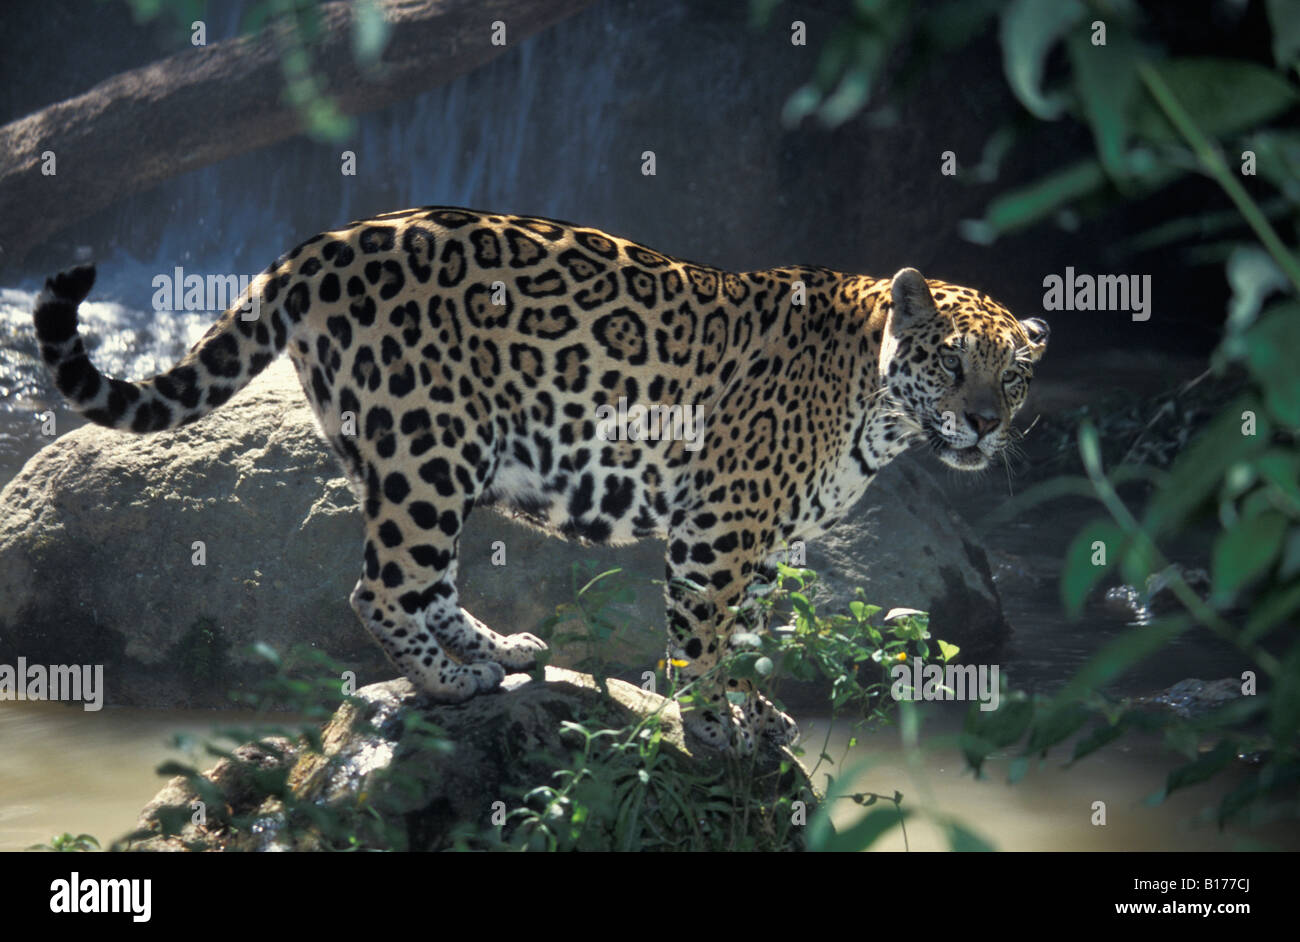 Jaguar Jaguar Panthera onca en animales del bosque lluvioso gatos grandes carnívoros Carnivora Felidae Grosskatzen Jaguare Katzen mamíferos Natu Foto de stock